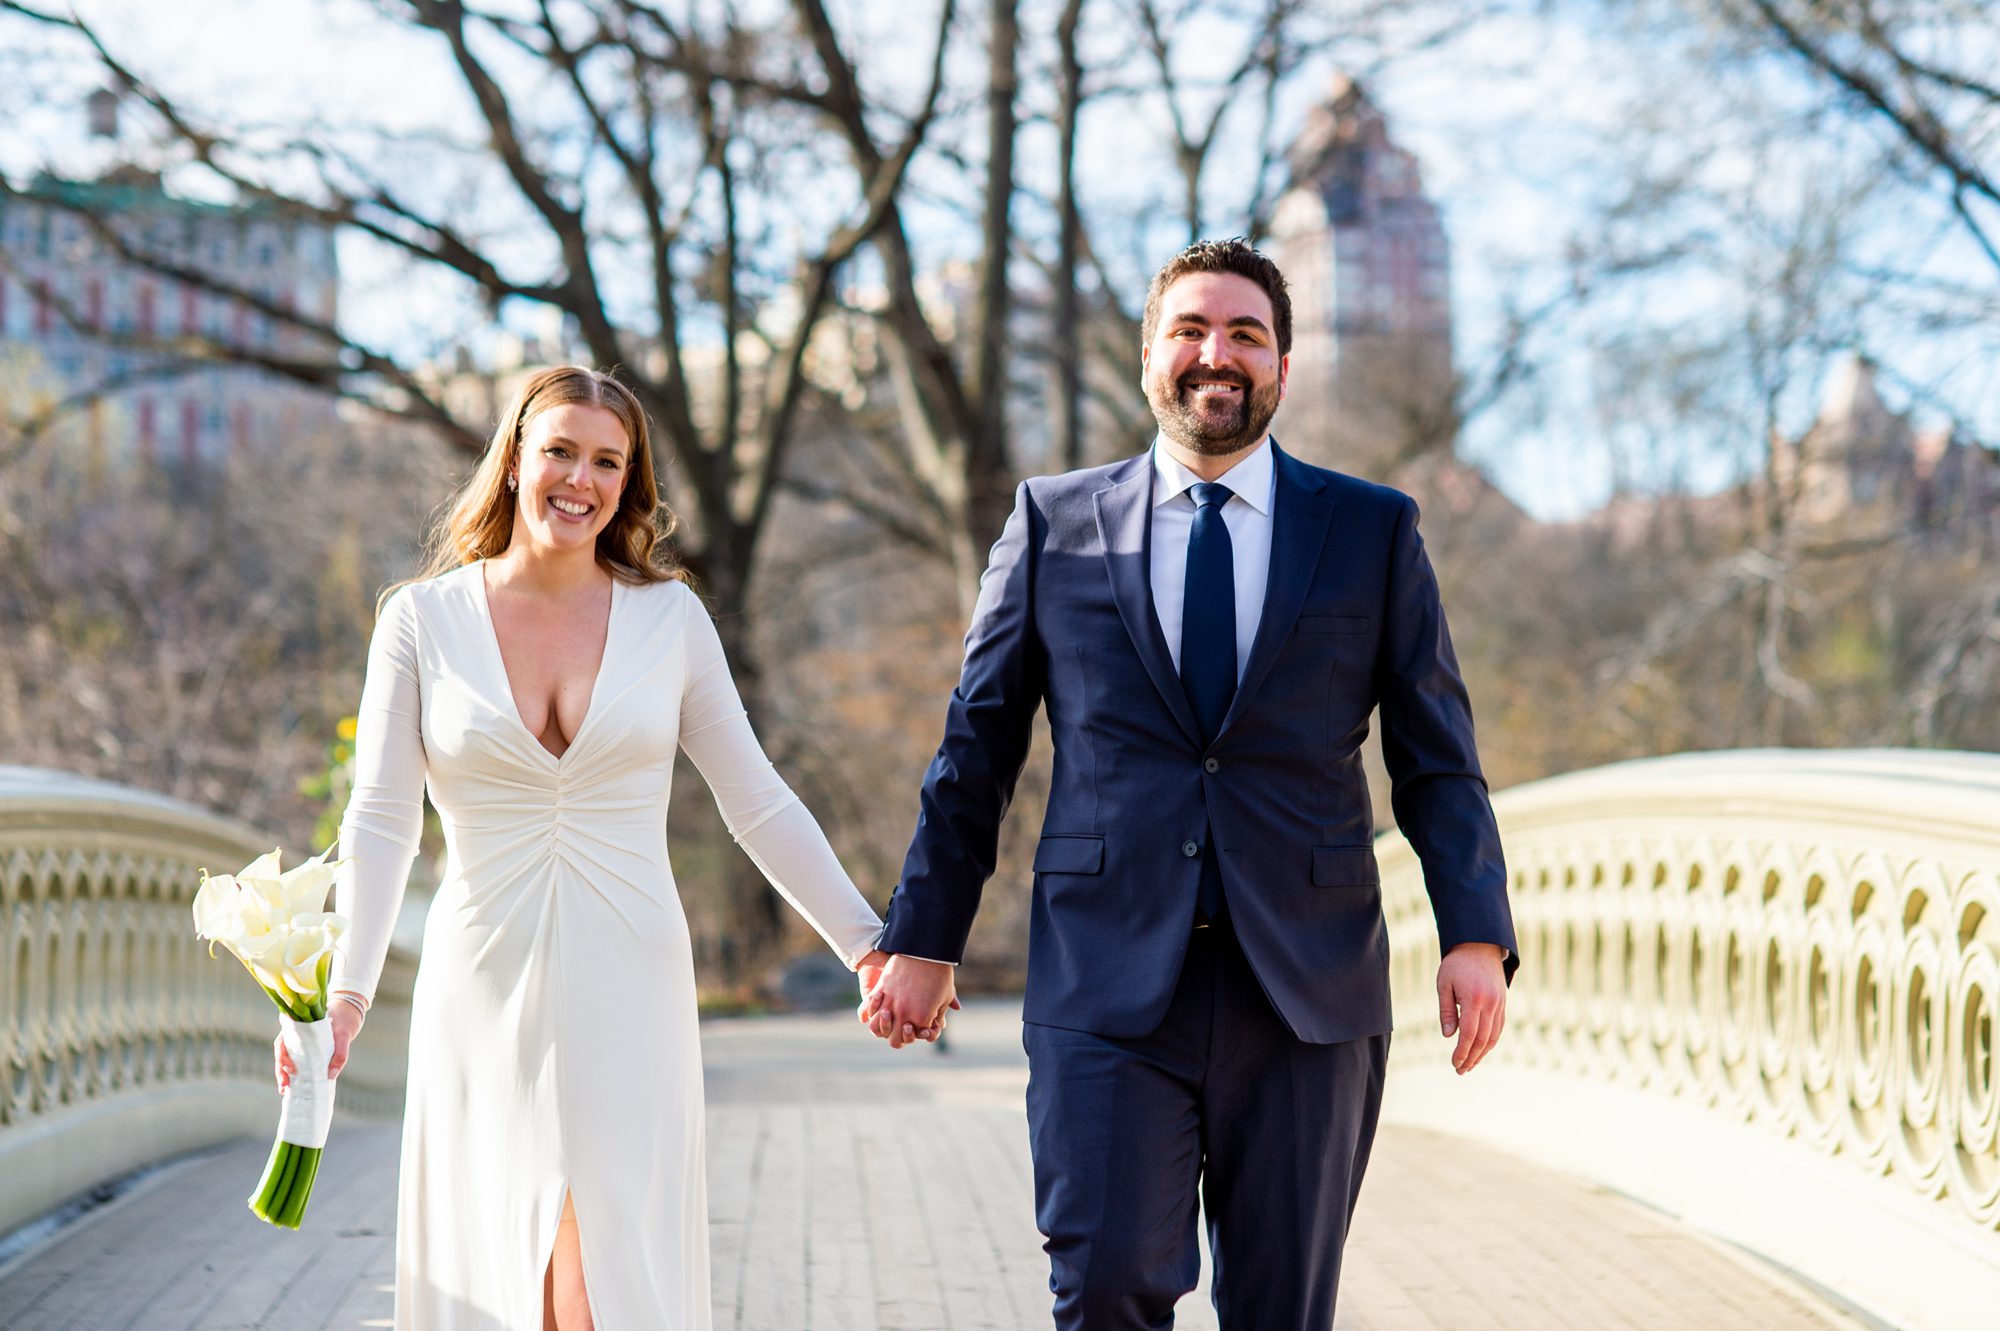 Central Park Wedding Photos on Bow Bridge 